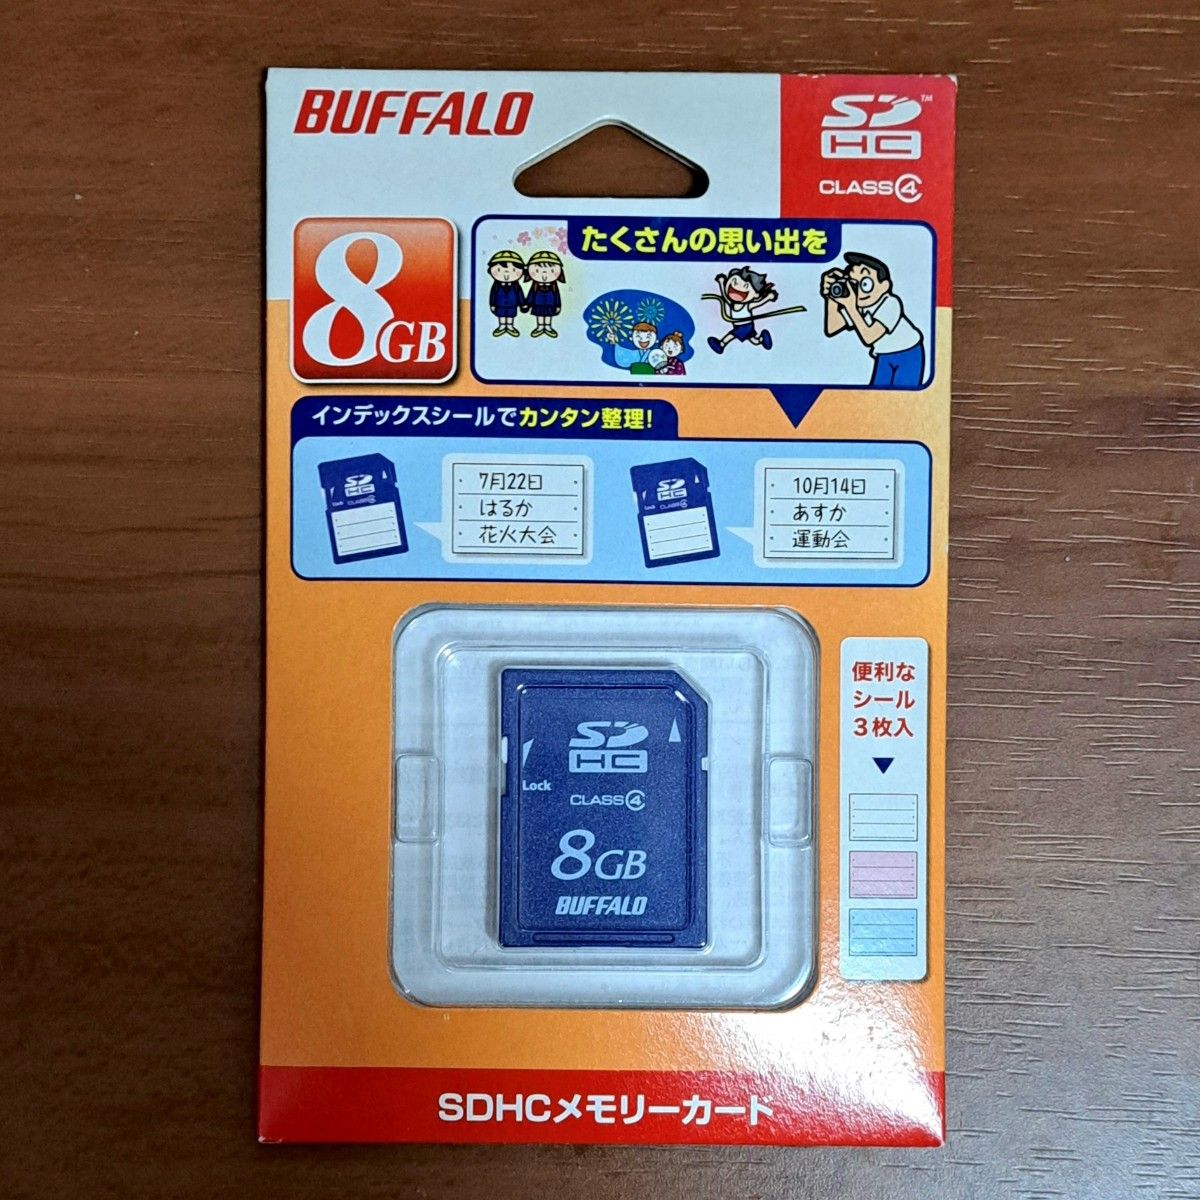 BUFFALO 8GB SDカード SDHC CLASS4